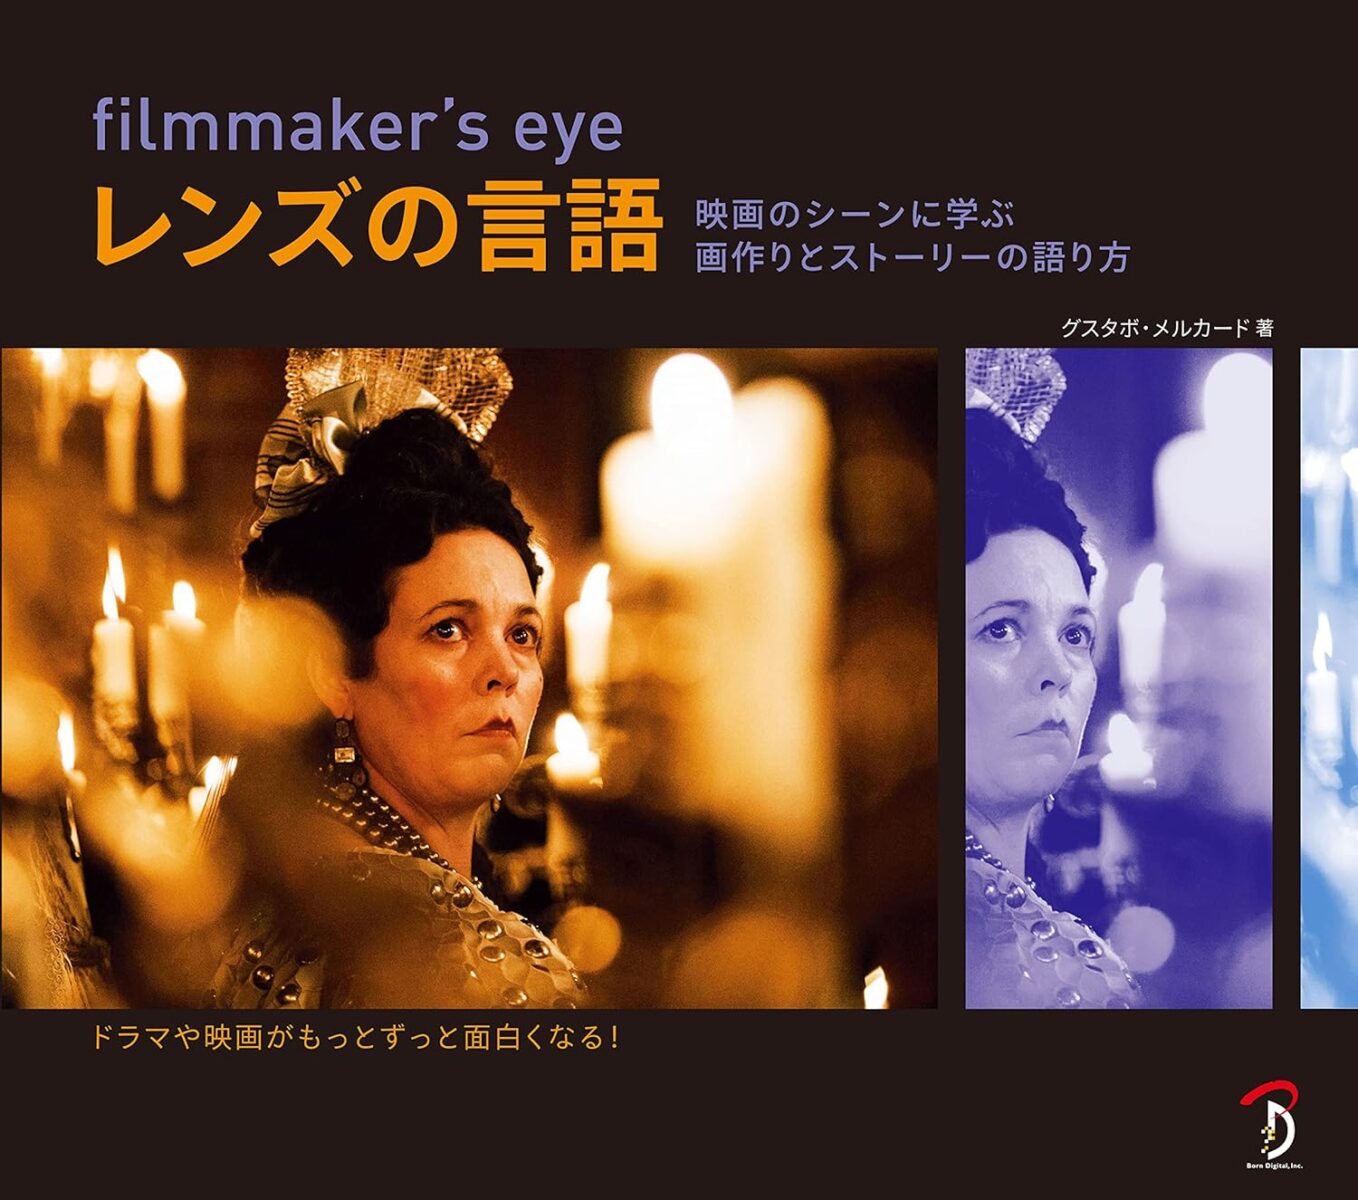 filmmaker's eye レンズの言語:映画のシーンに学ぶ画作りとストーリーの語り方